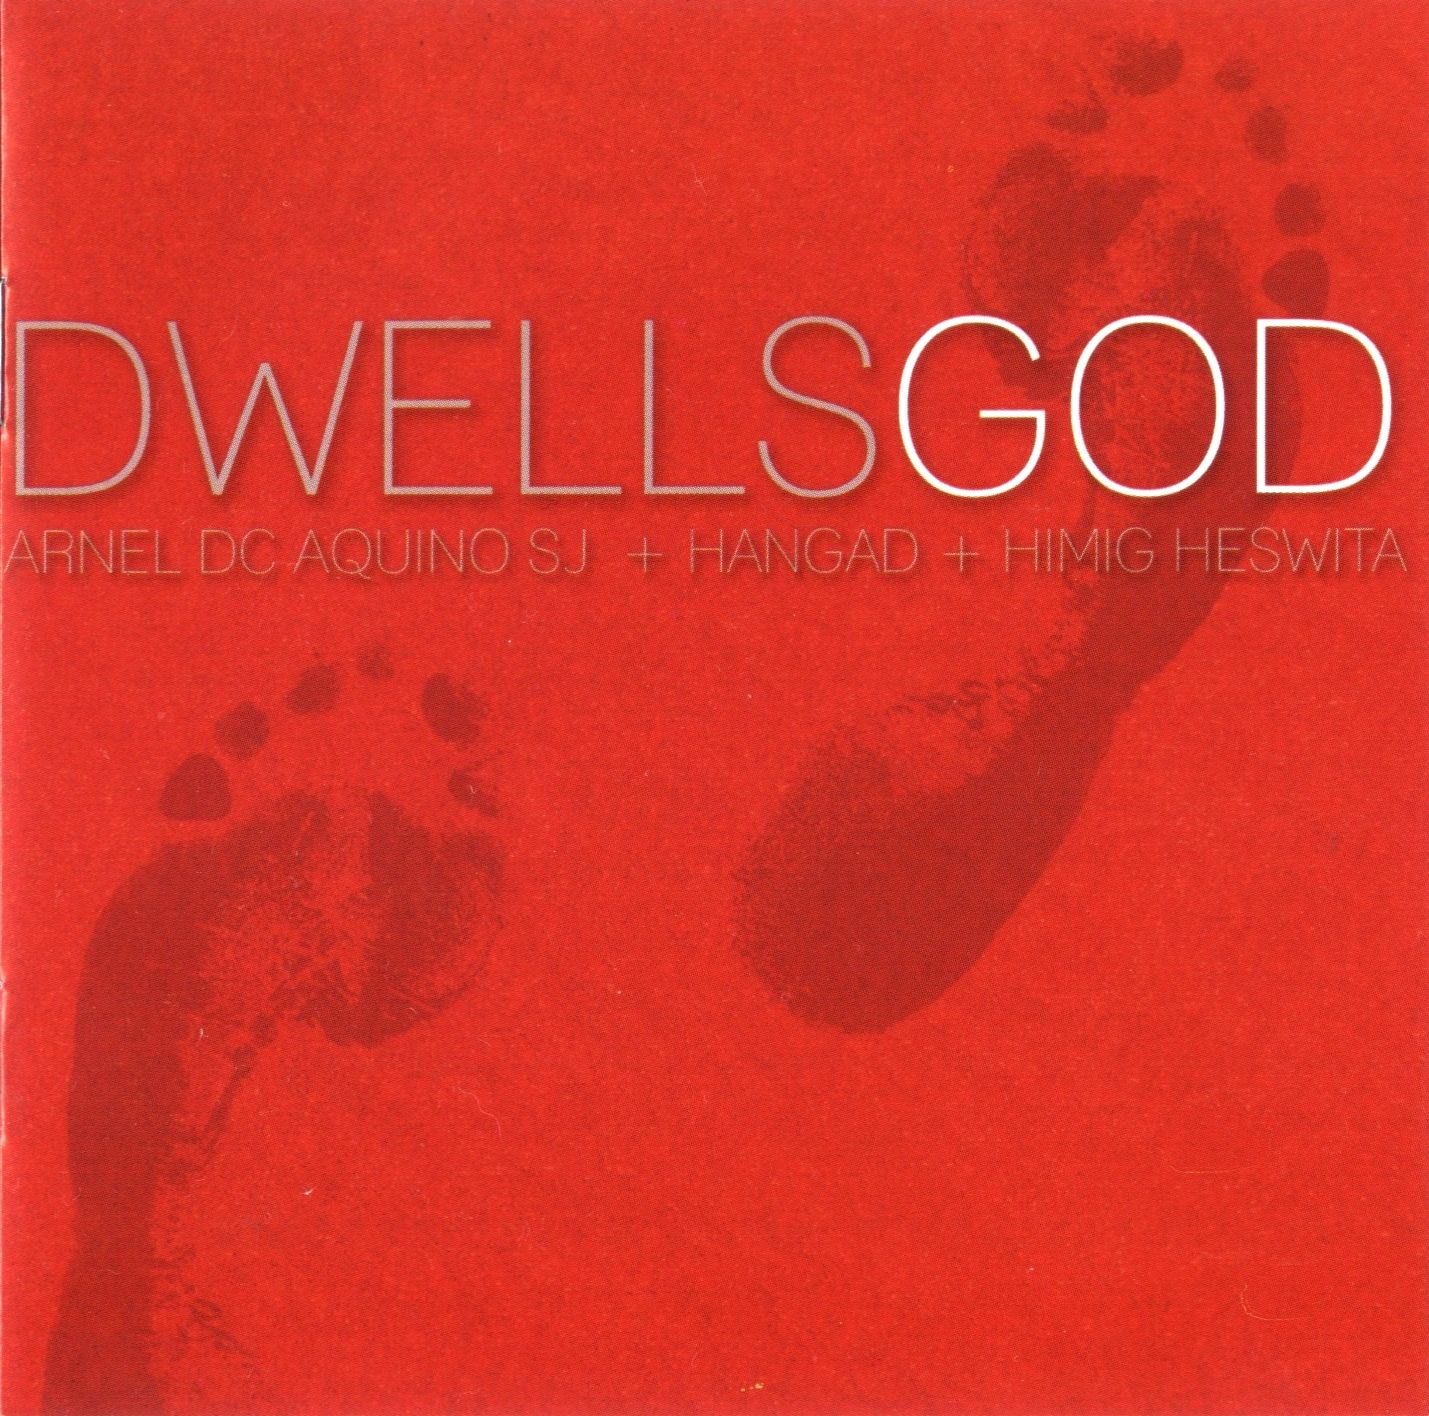 CD- Dwells God